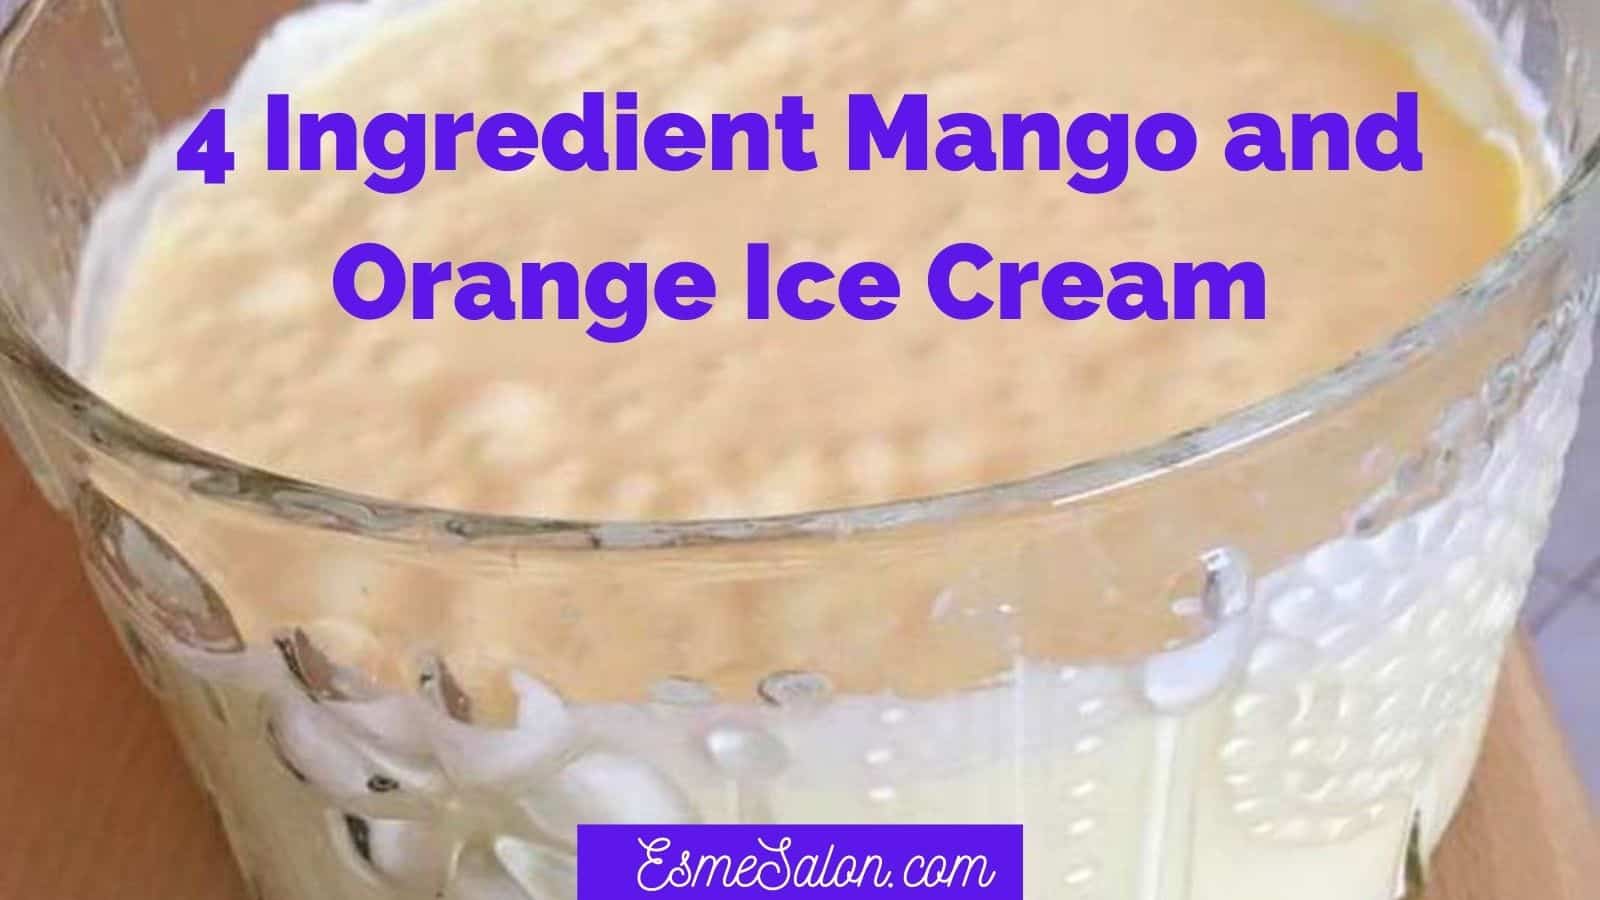 A glass bowl with Mango and Orange Ice Cream